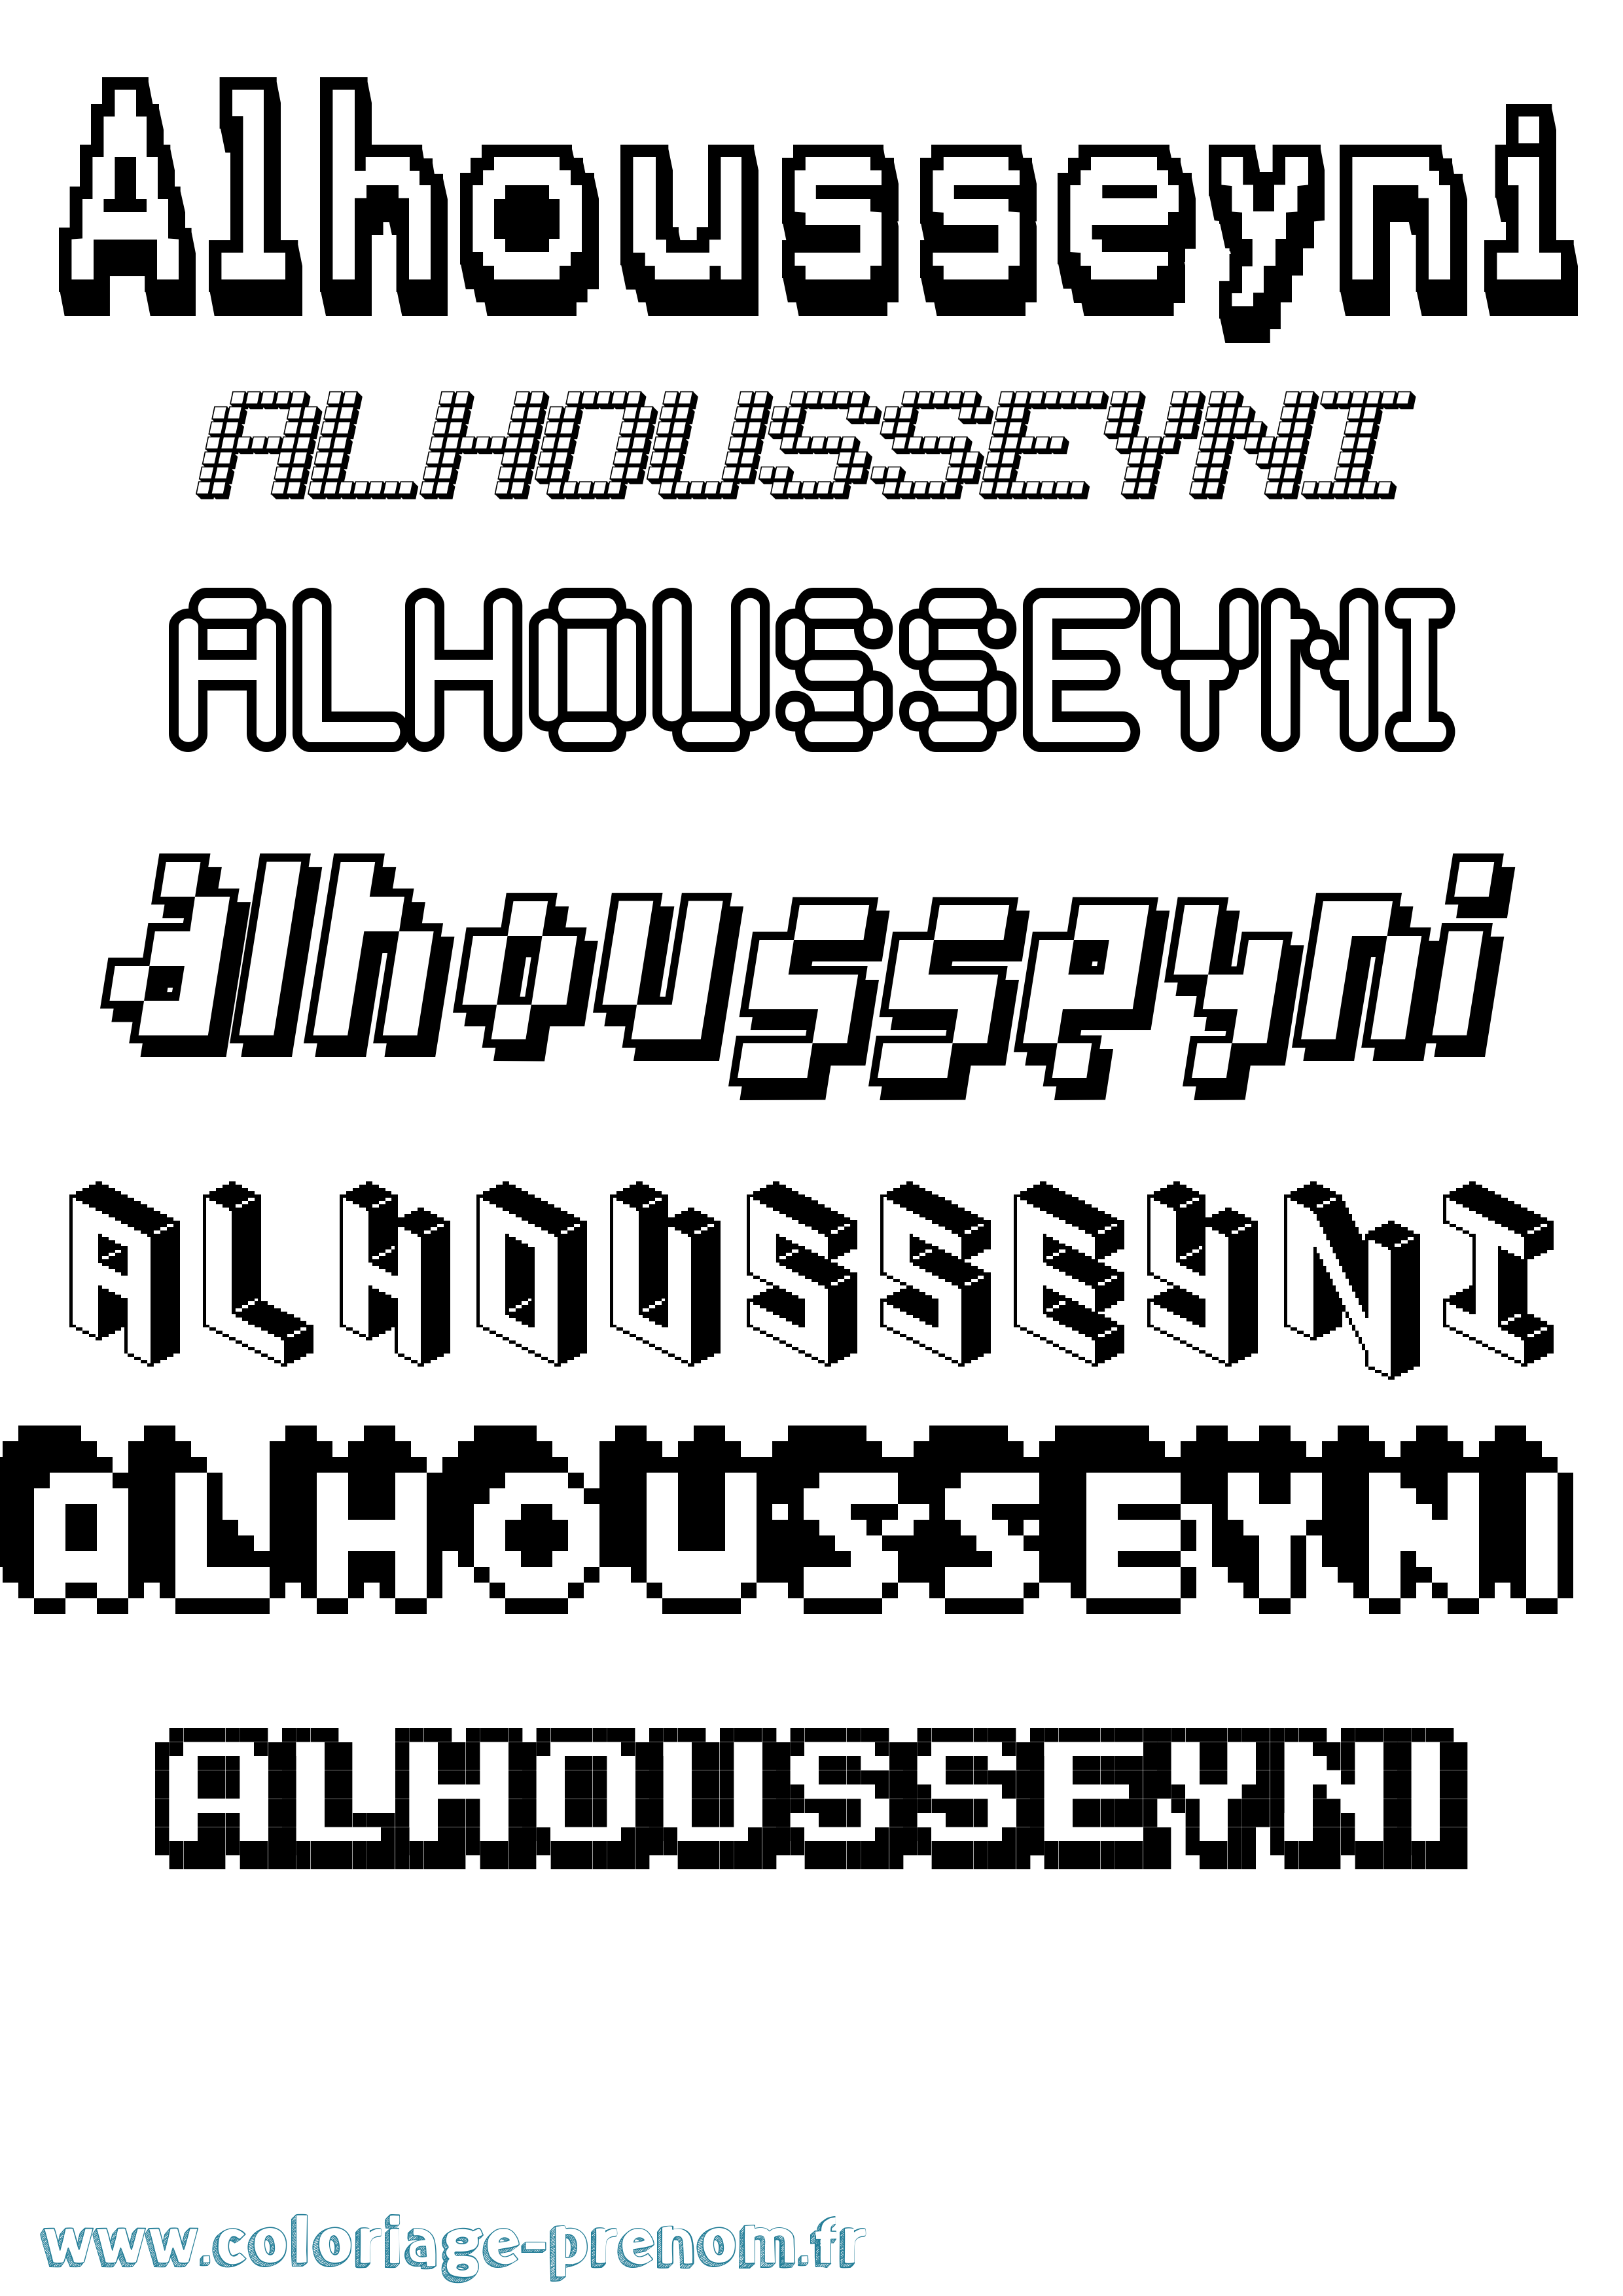 Coloriage prénom Alhousseyni Pixel